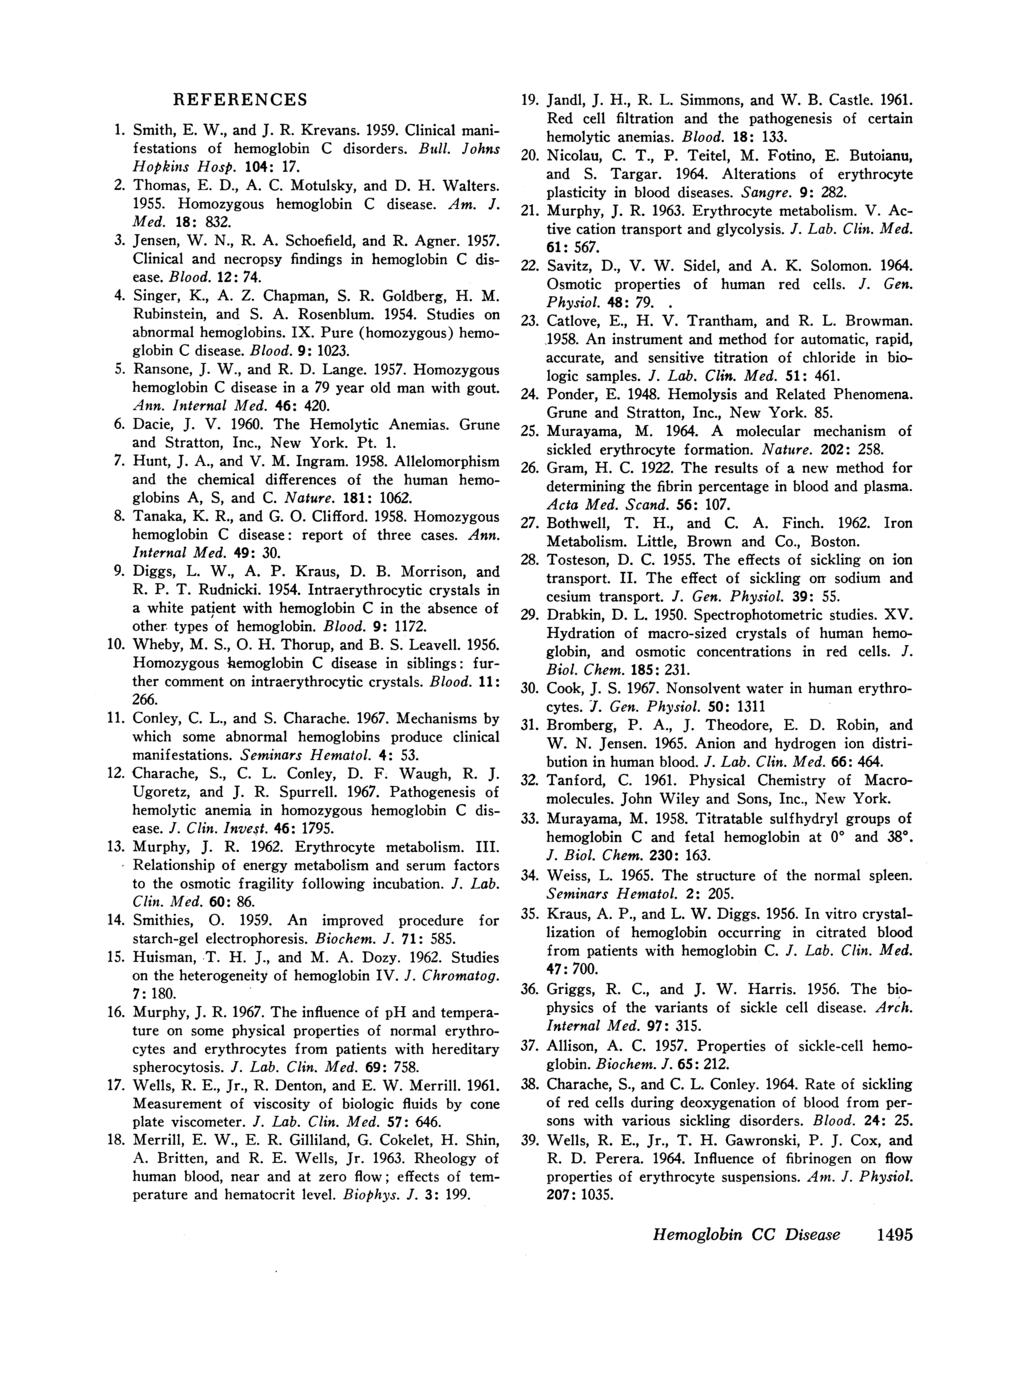 REFERENCES 1. Smith, E. W., and J. R. Krevans. 1959. Clinical manifestations of hemoglobin C disorders. Bull. Johns Hopkins Hosp. 104: 17. 2. Thomas, E. D., A. C. Motulsky, and D. H. Walters. 1955.